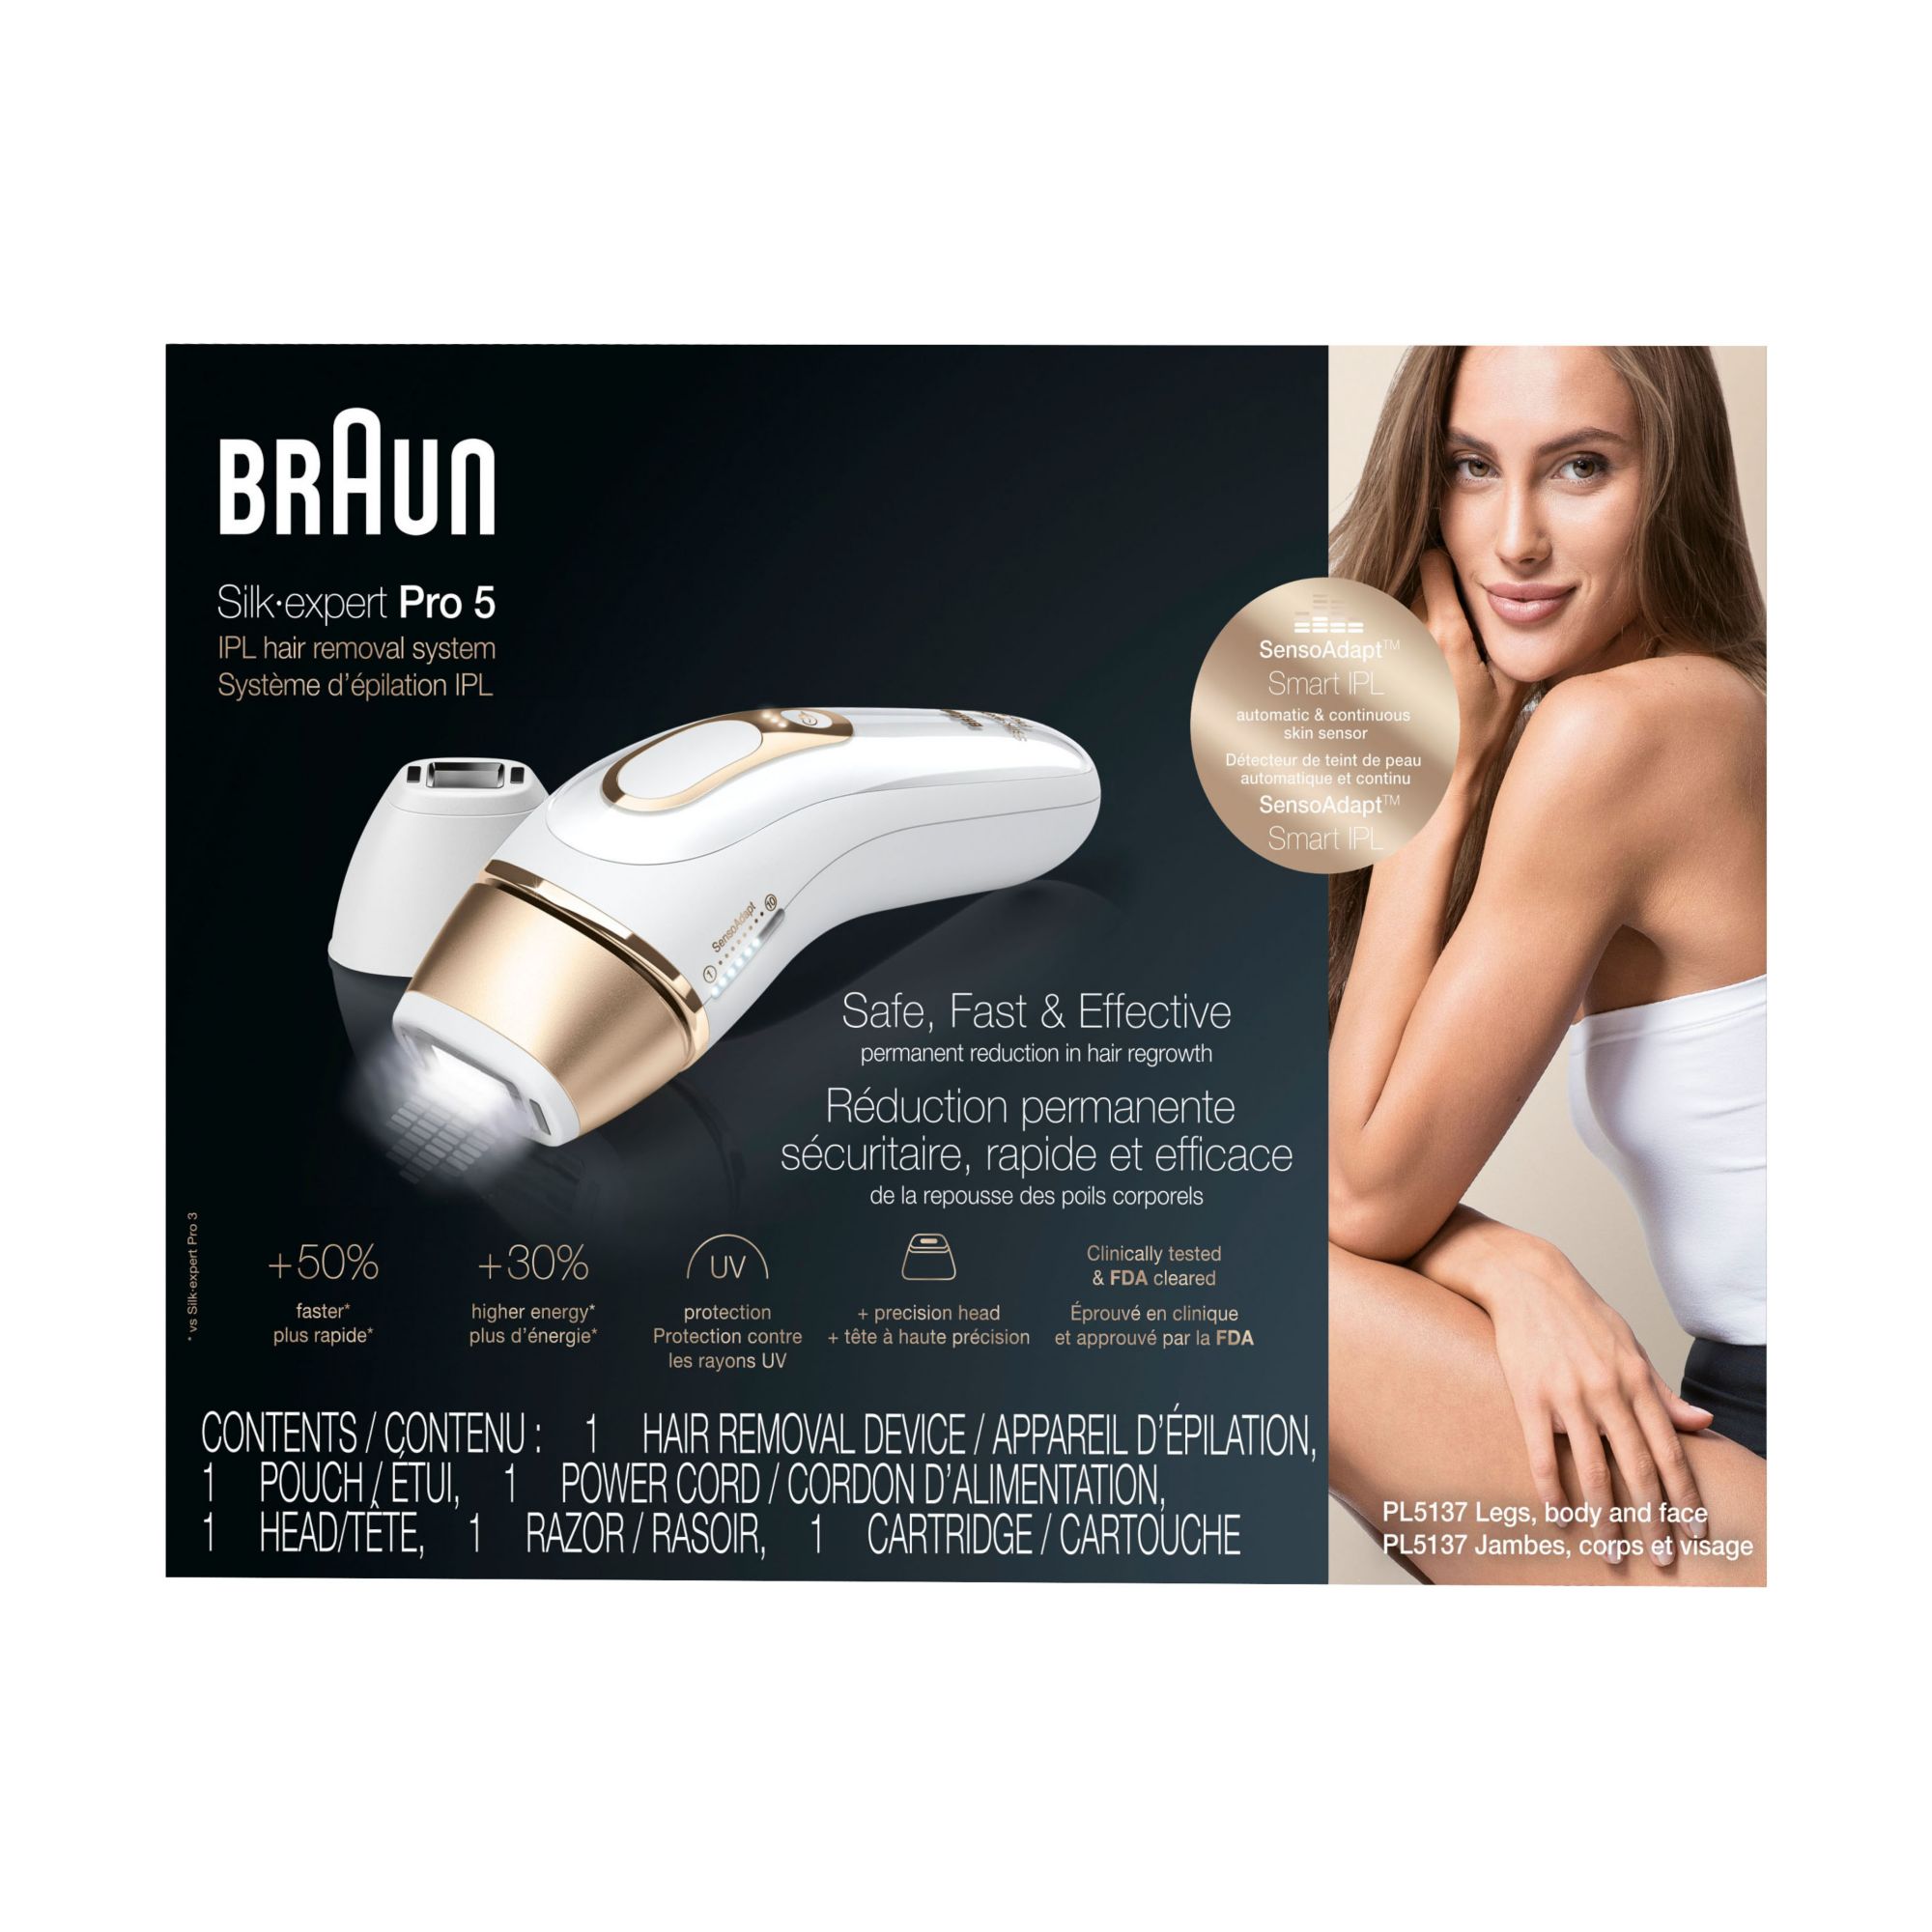 Braun Silk-expert Pro 5 PL5137 IPL Hair Removal